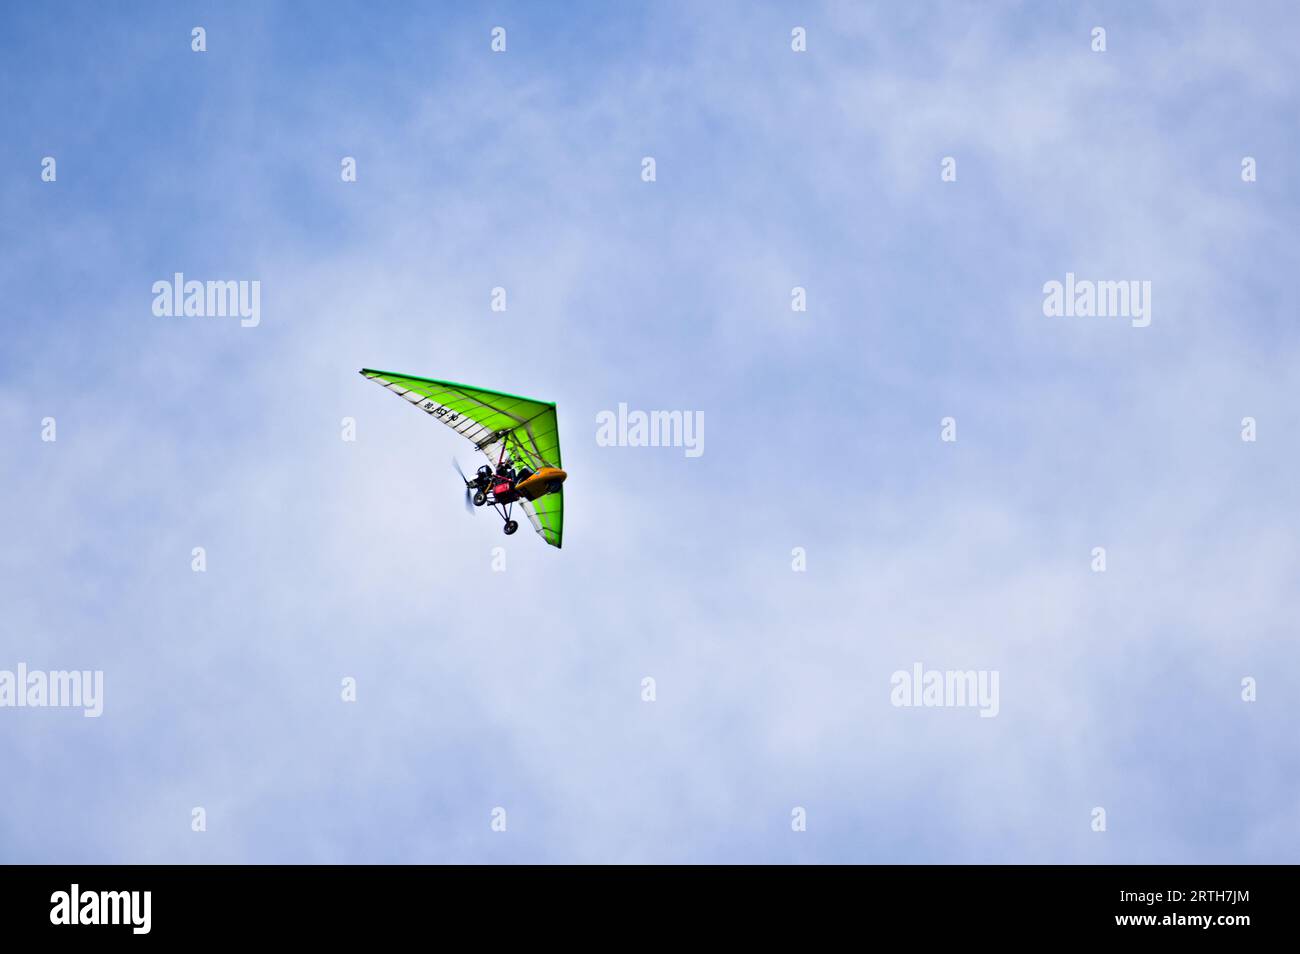 Man on green motorized hang glider is enjoying his flight. Stock Photo